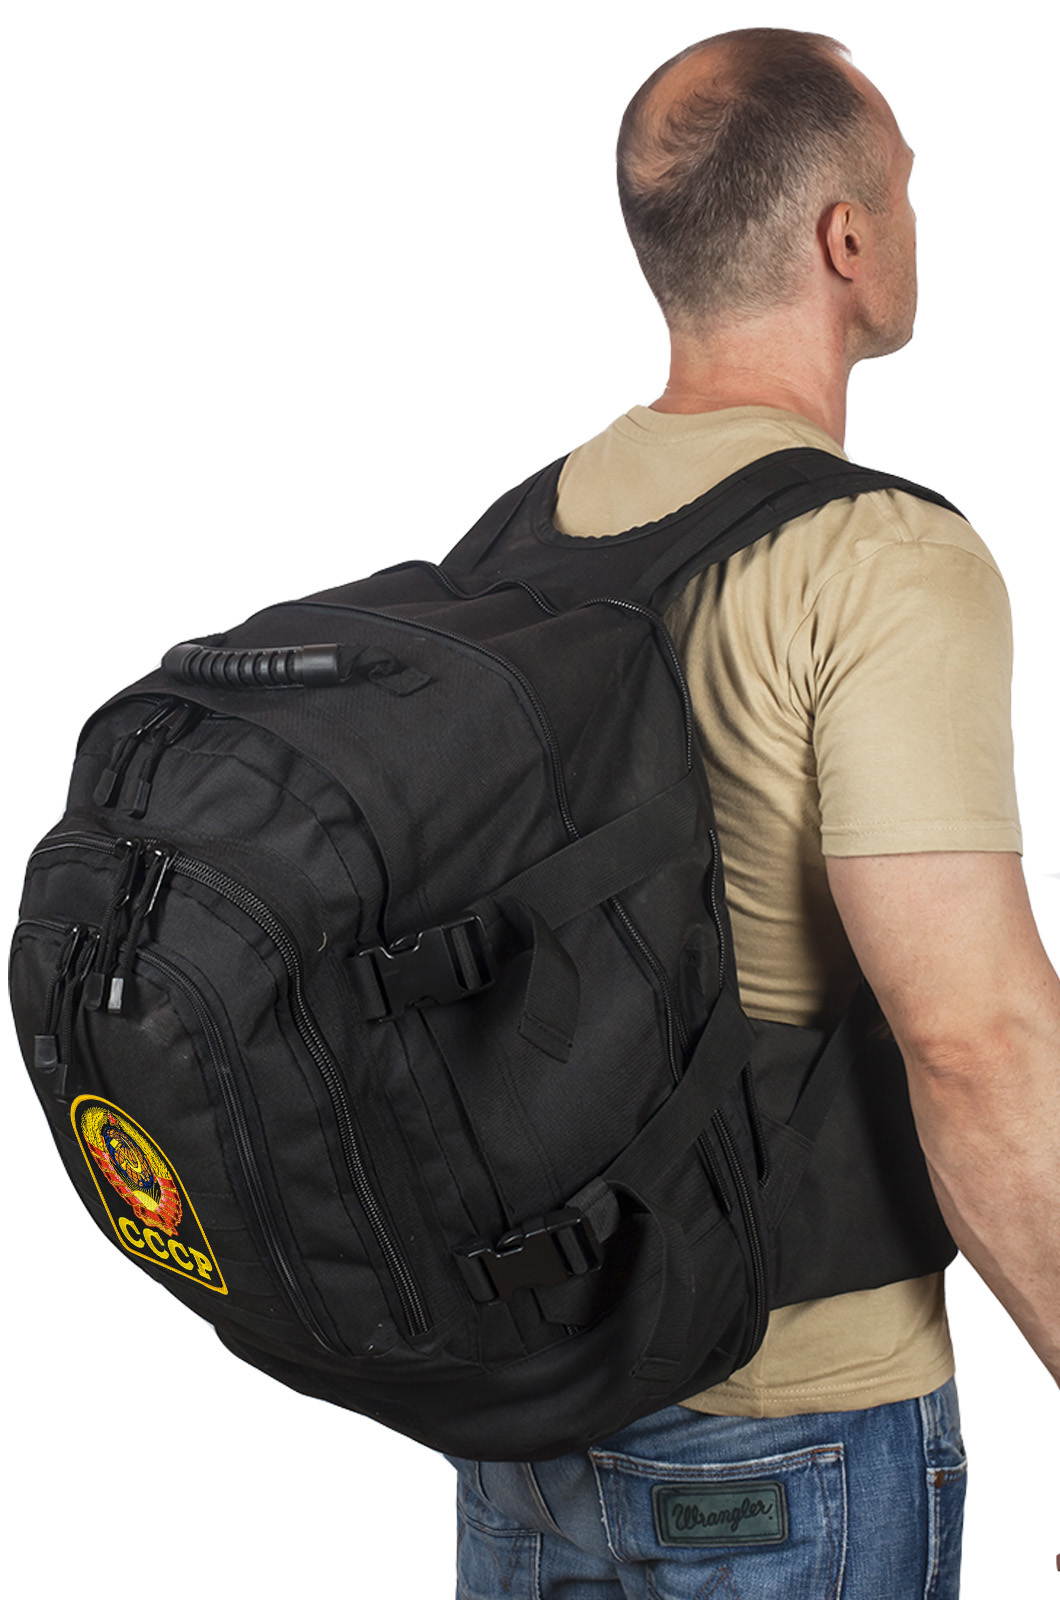 Черный армейский рюкзак 3-Day Expandable Backpack 08002A Black с эмблемой СССР 